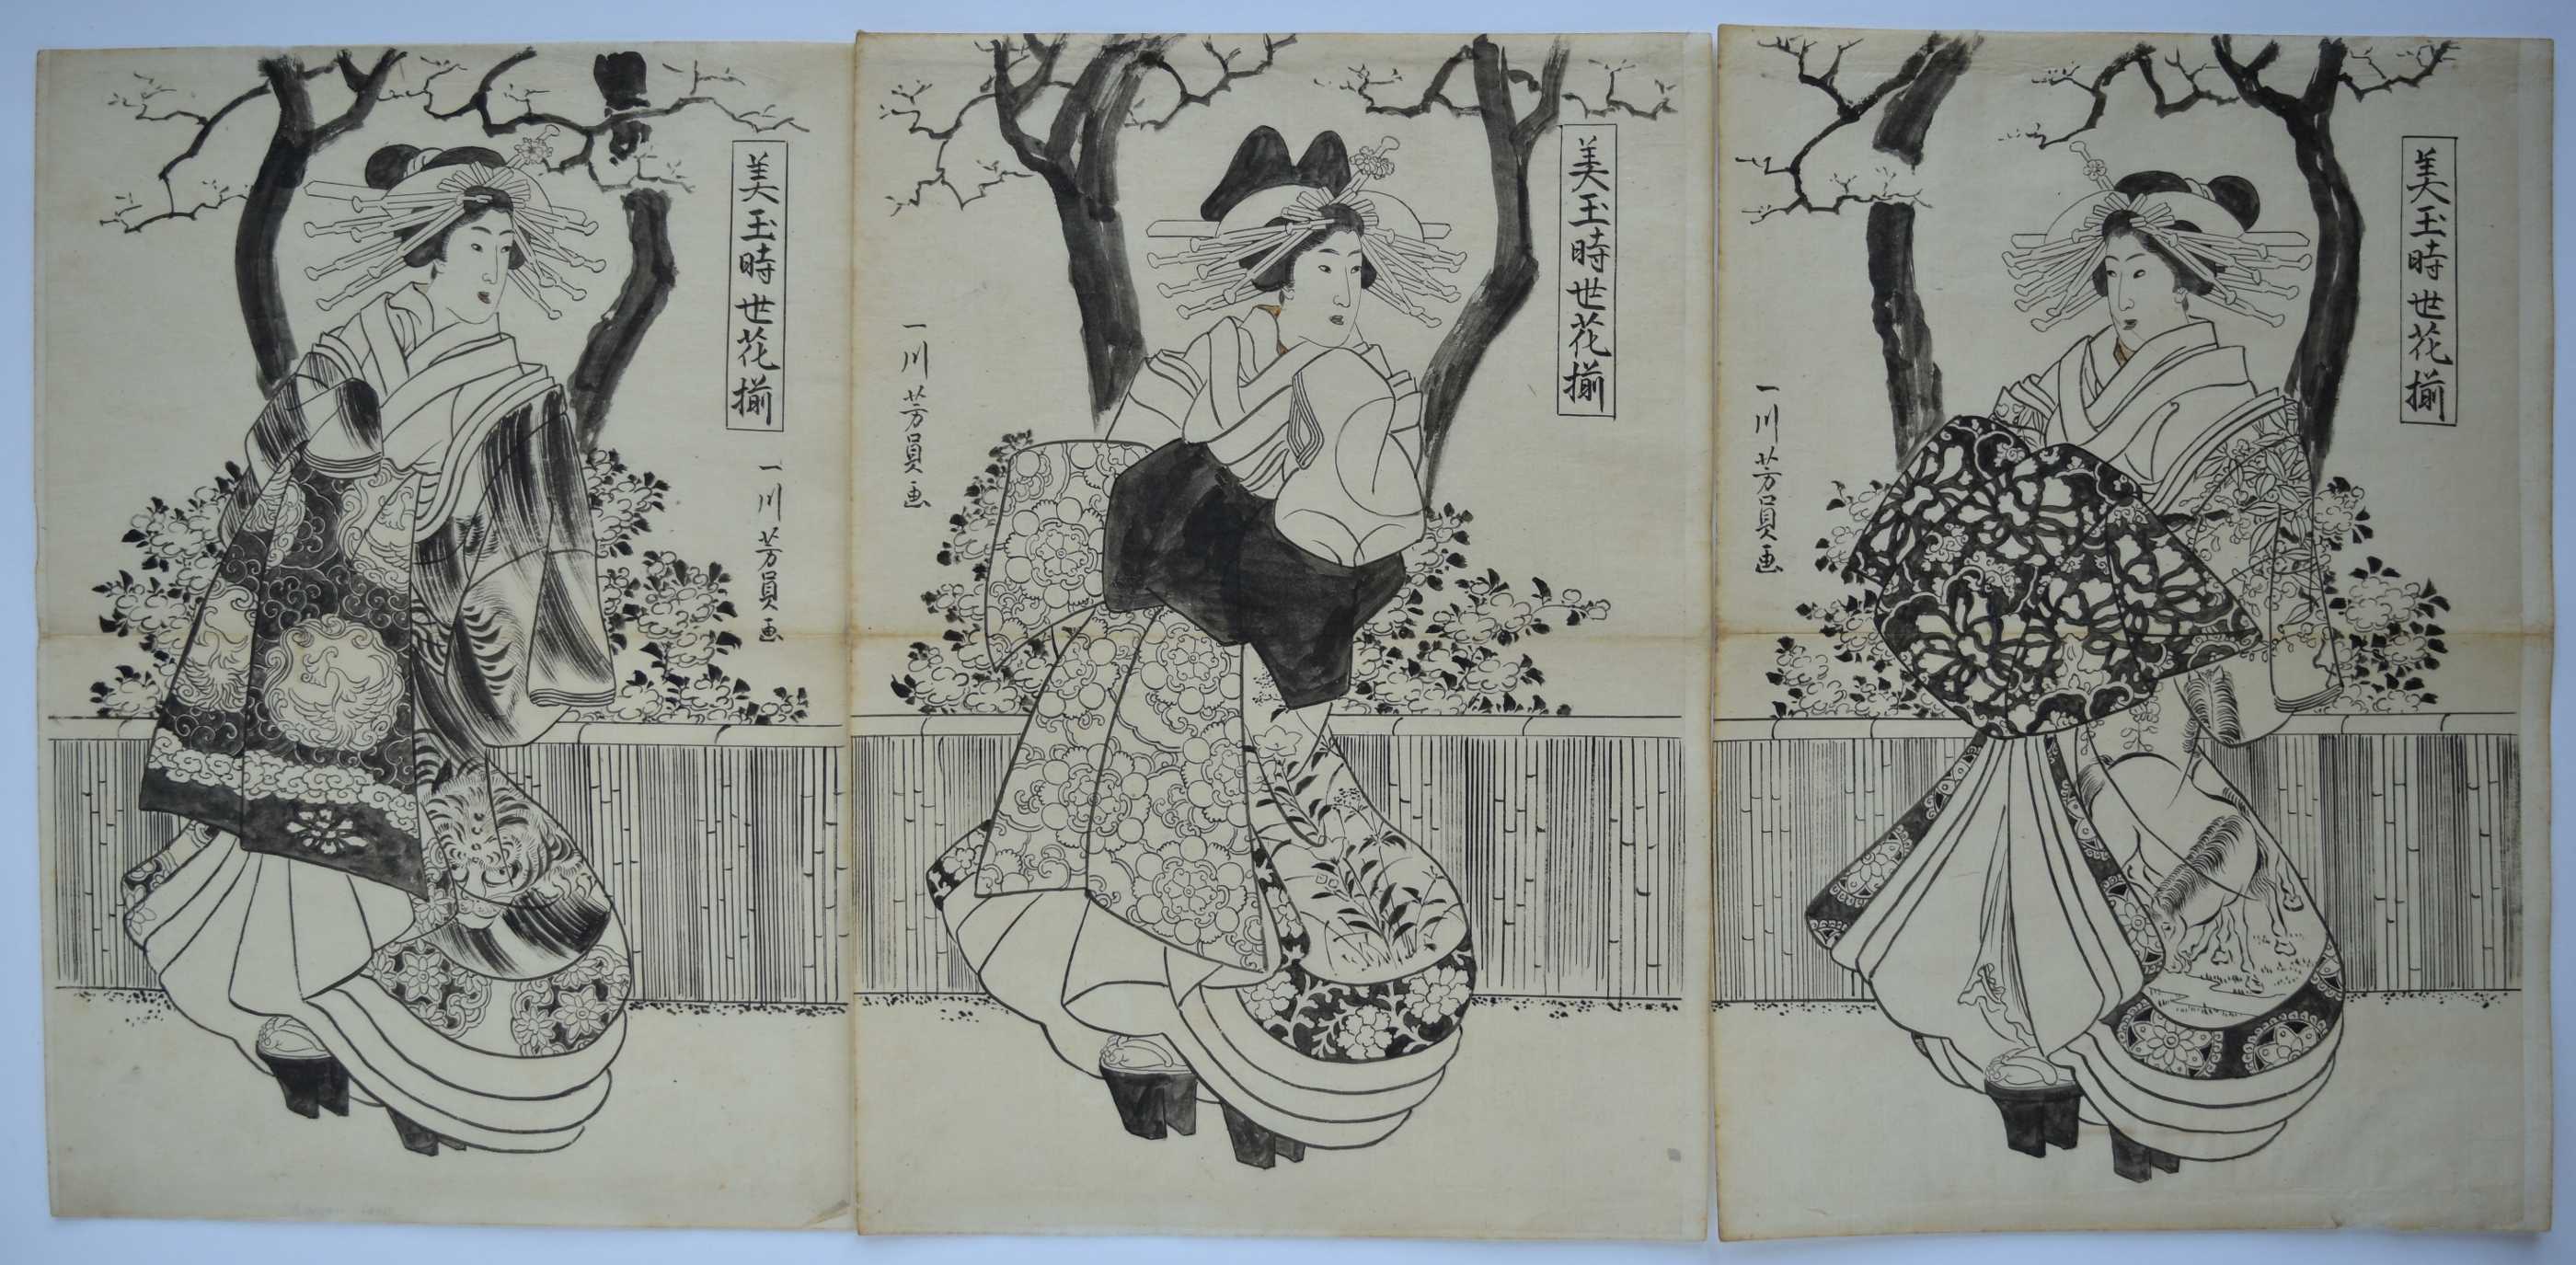 JapanesePrints-London | Brush Drawings and Hanshita-e